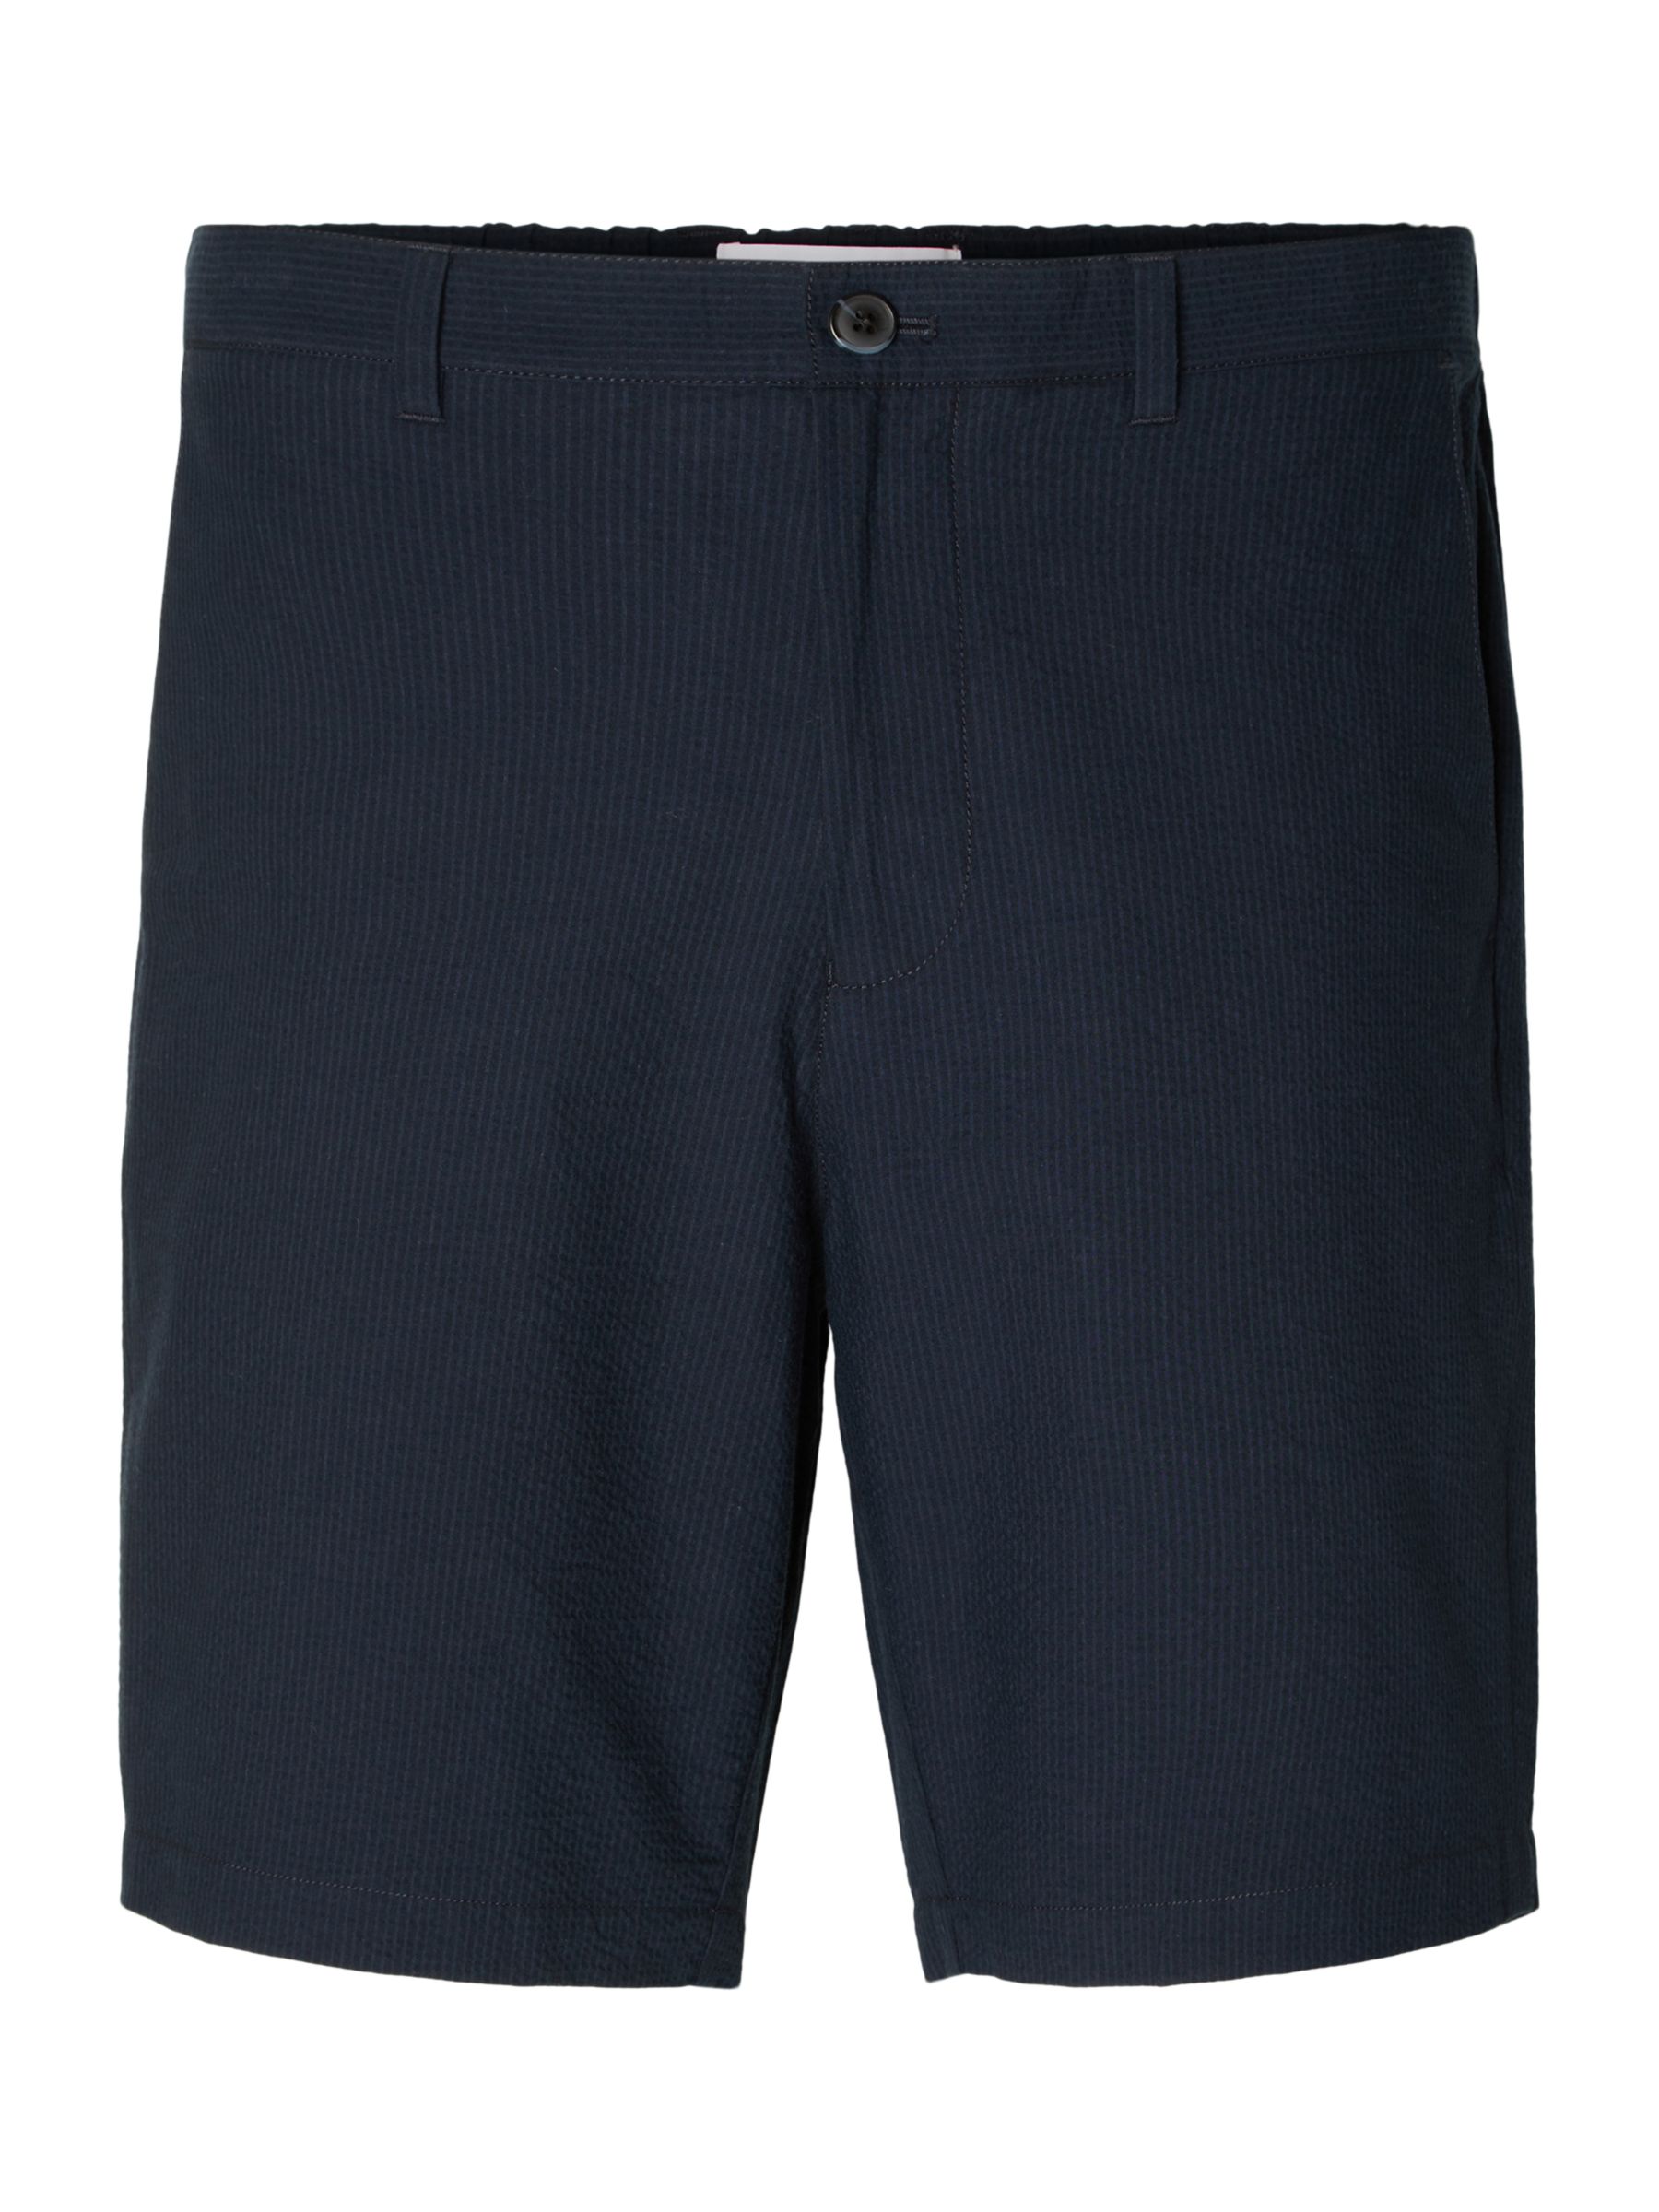 Buy SELECTED HOMME Regular Fitted Seersucker Shorts, Blue Online at johnlewis.com